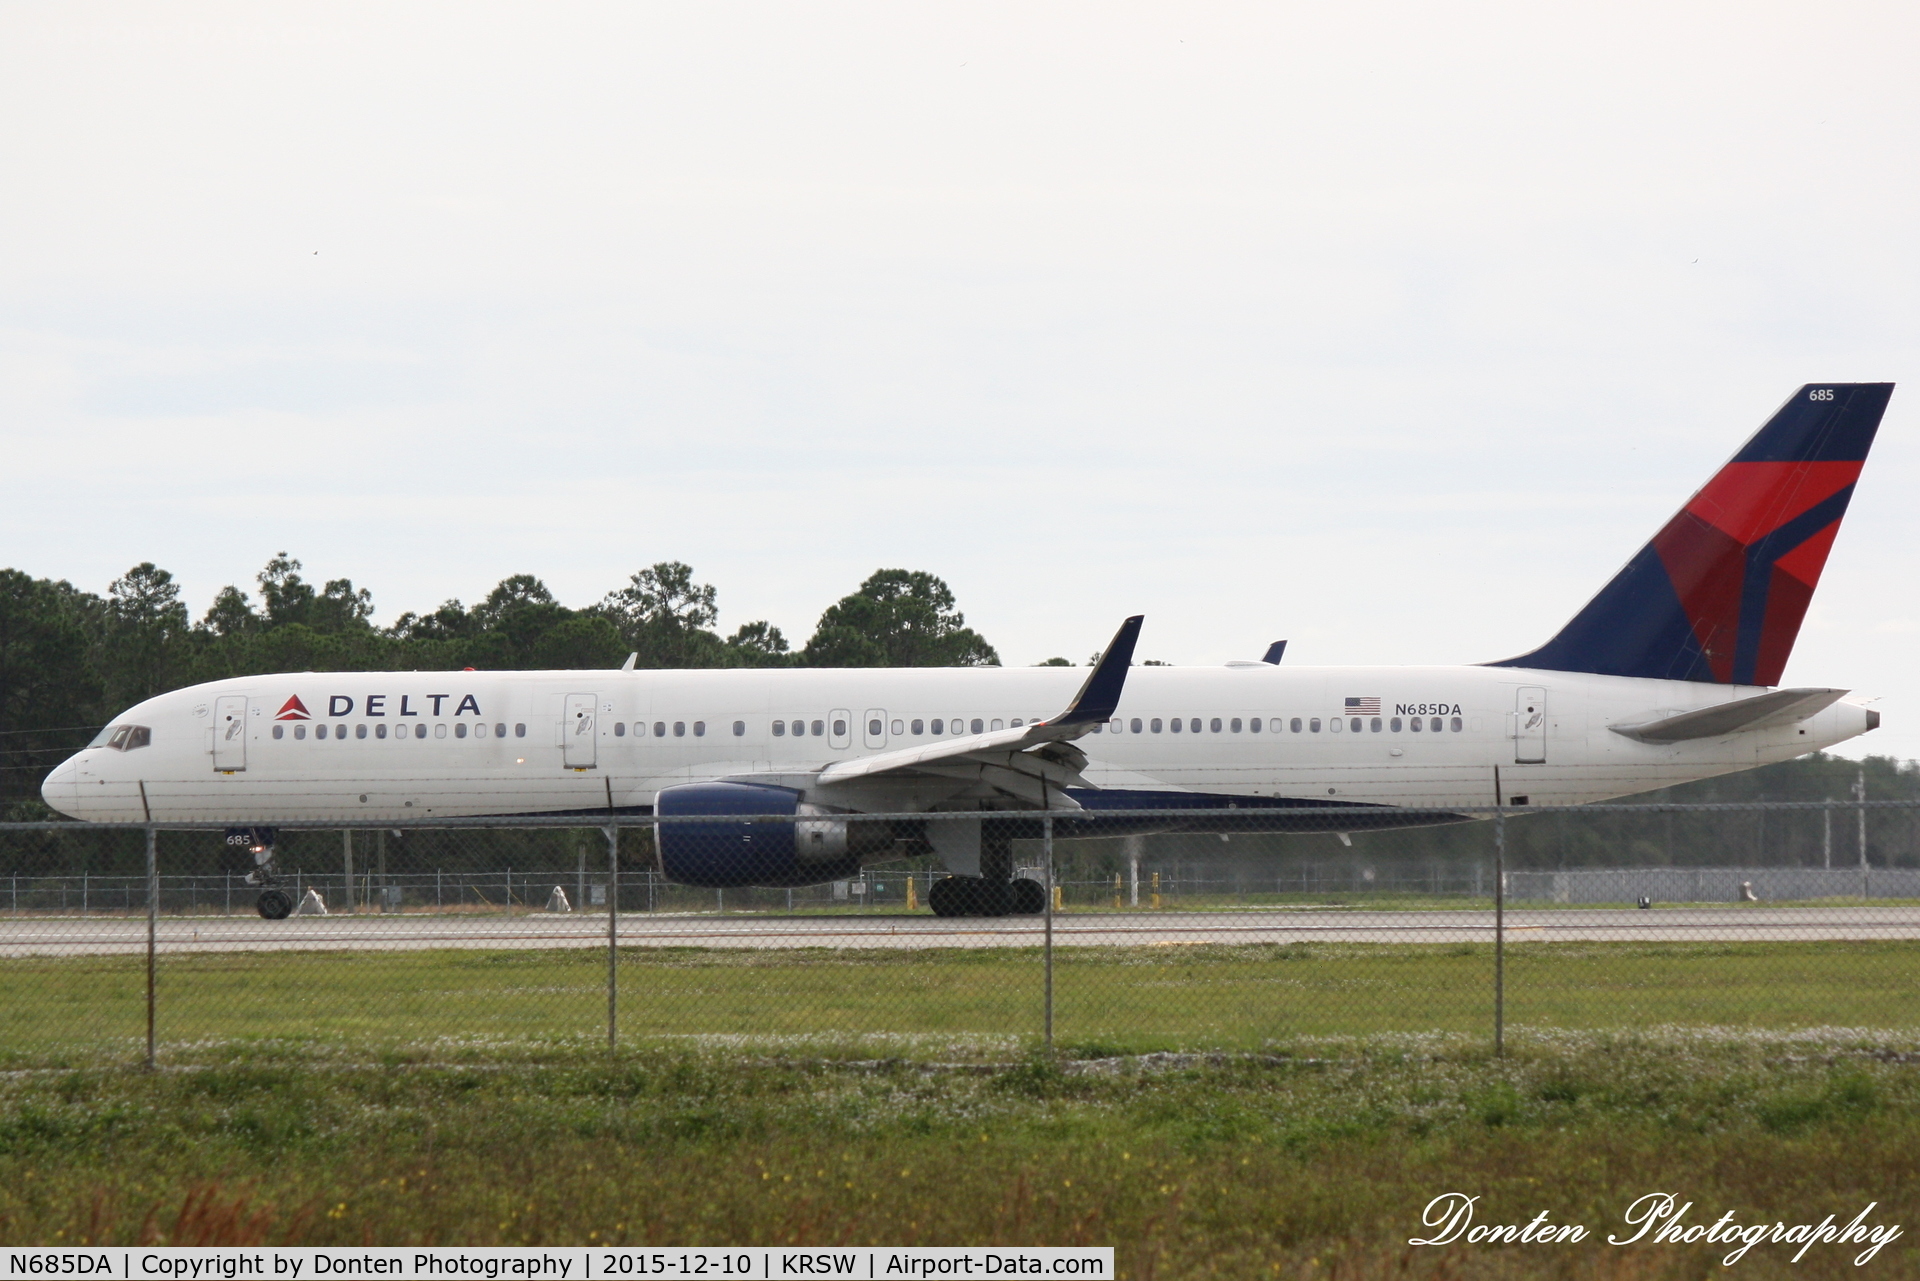 N685DA, 1995 Boeing 757-232 C/N 27588, Delta Flight 1723 (N685DA) arrives at Southwest Florida International Airport following flight from Minneapolis-St Paul International Airport